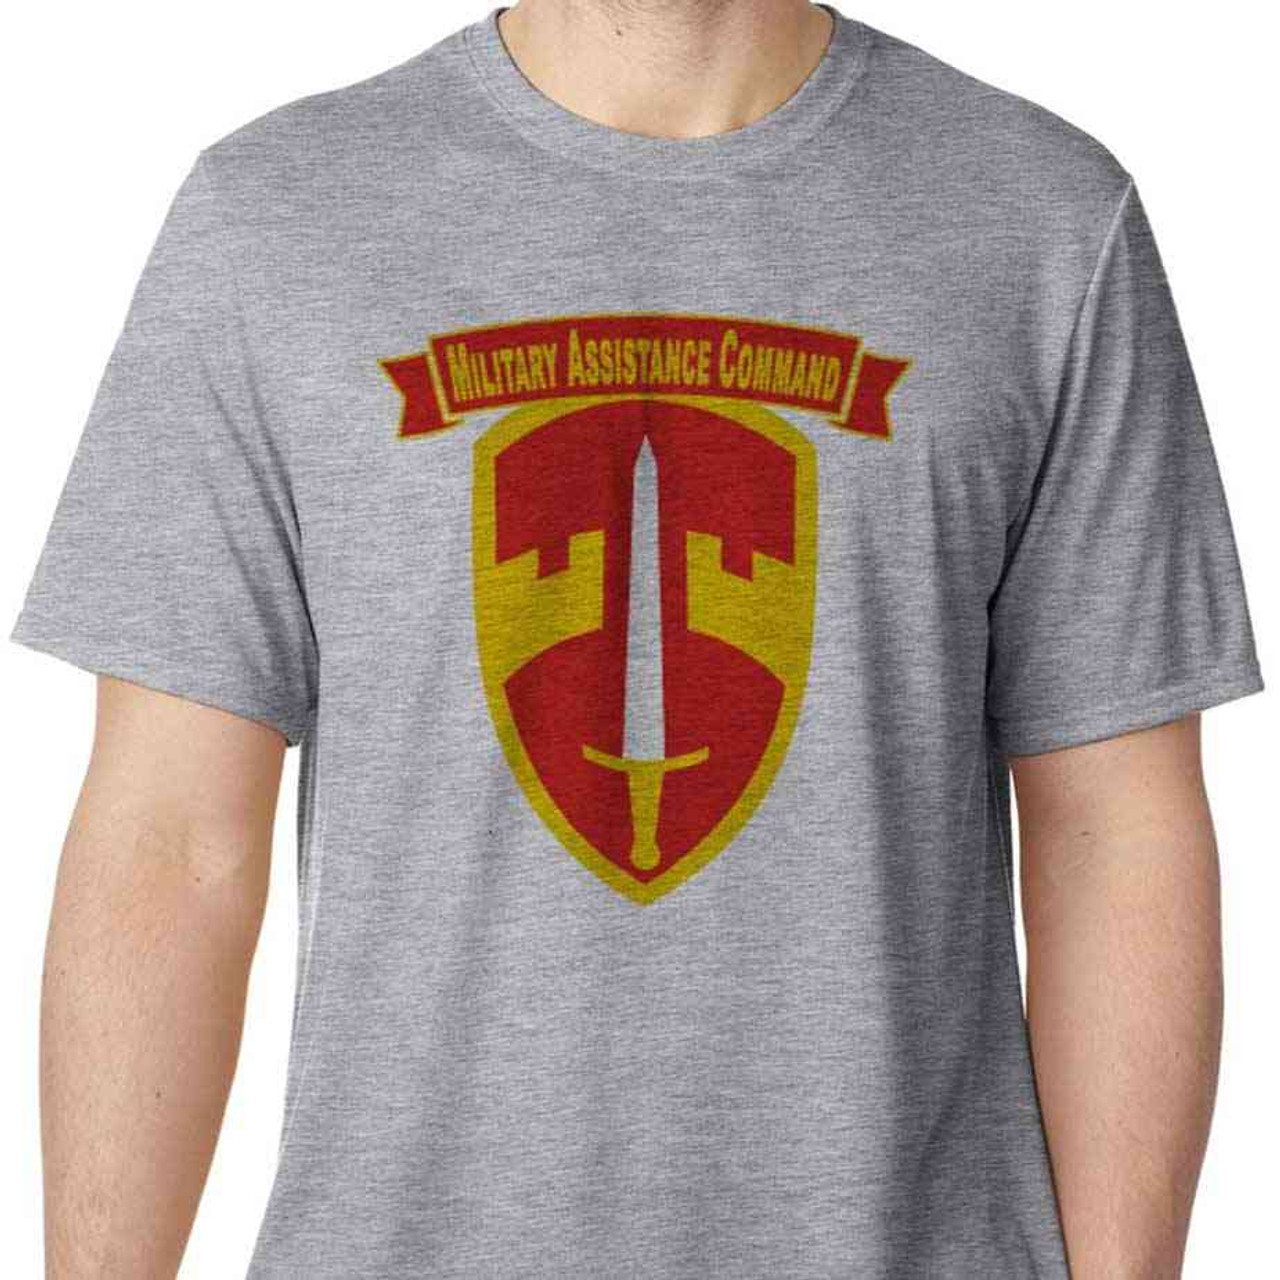 army macv military assistance command vietnam performance tshirt